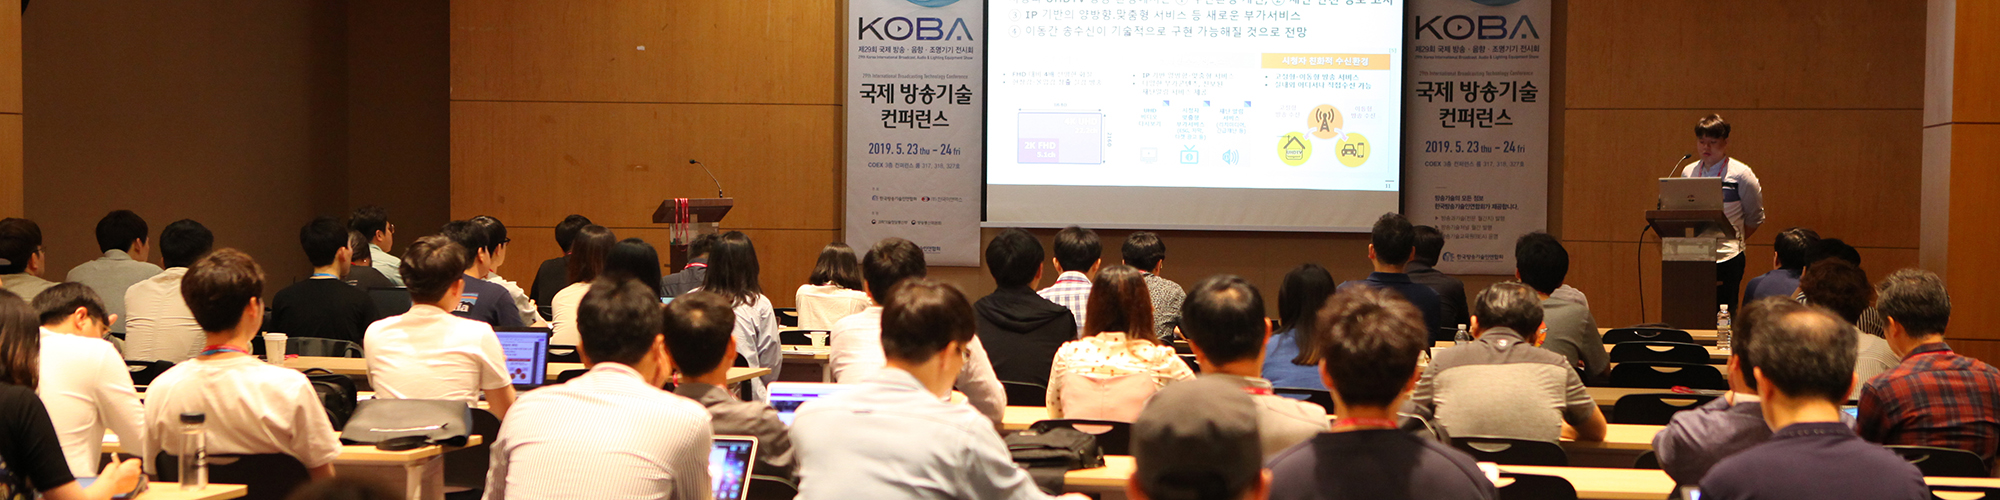 KOBA 2019 컨퍼런스